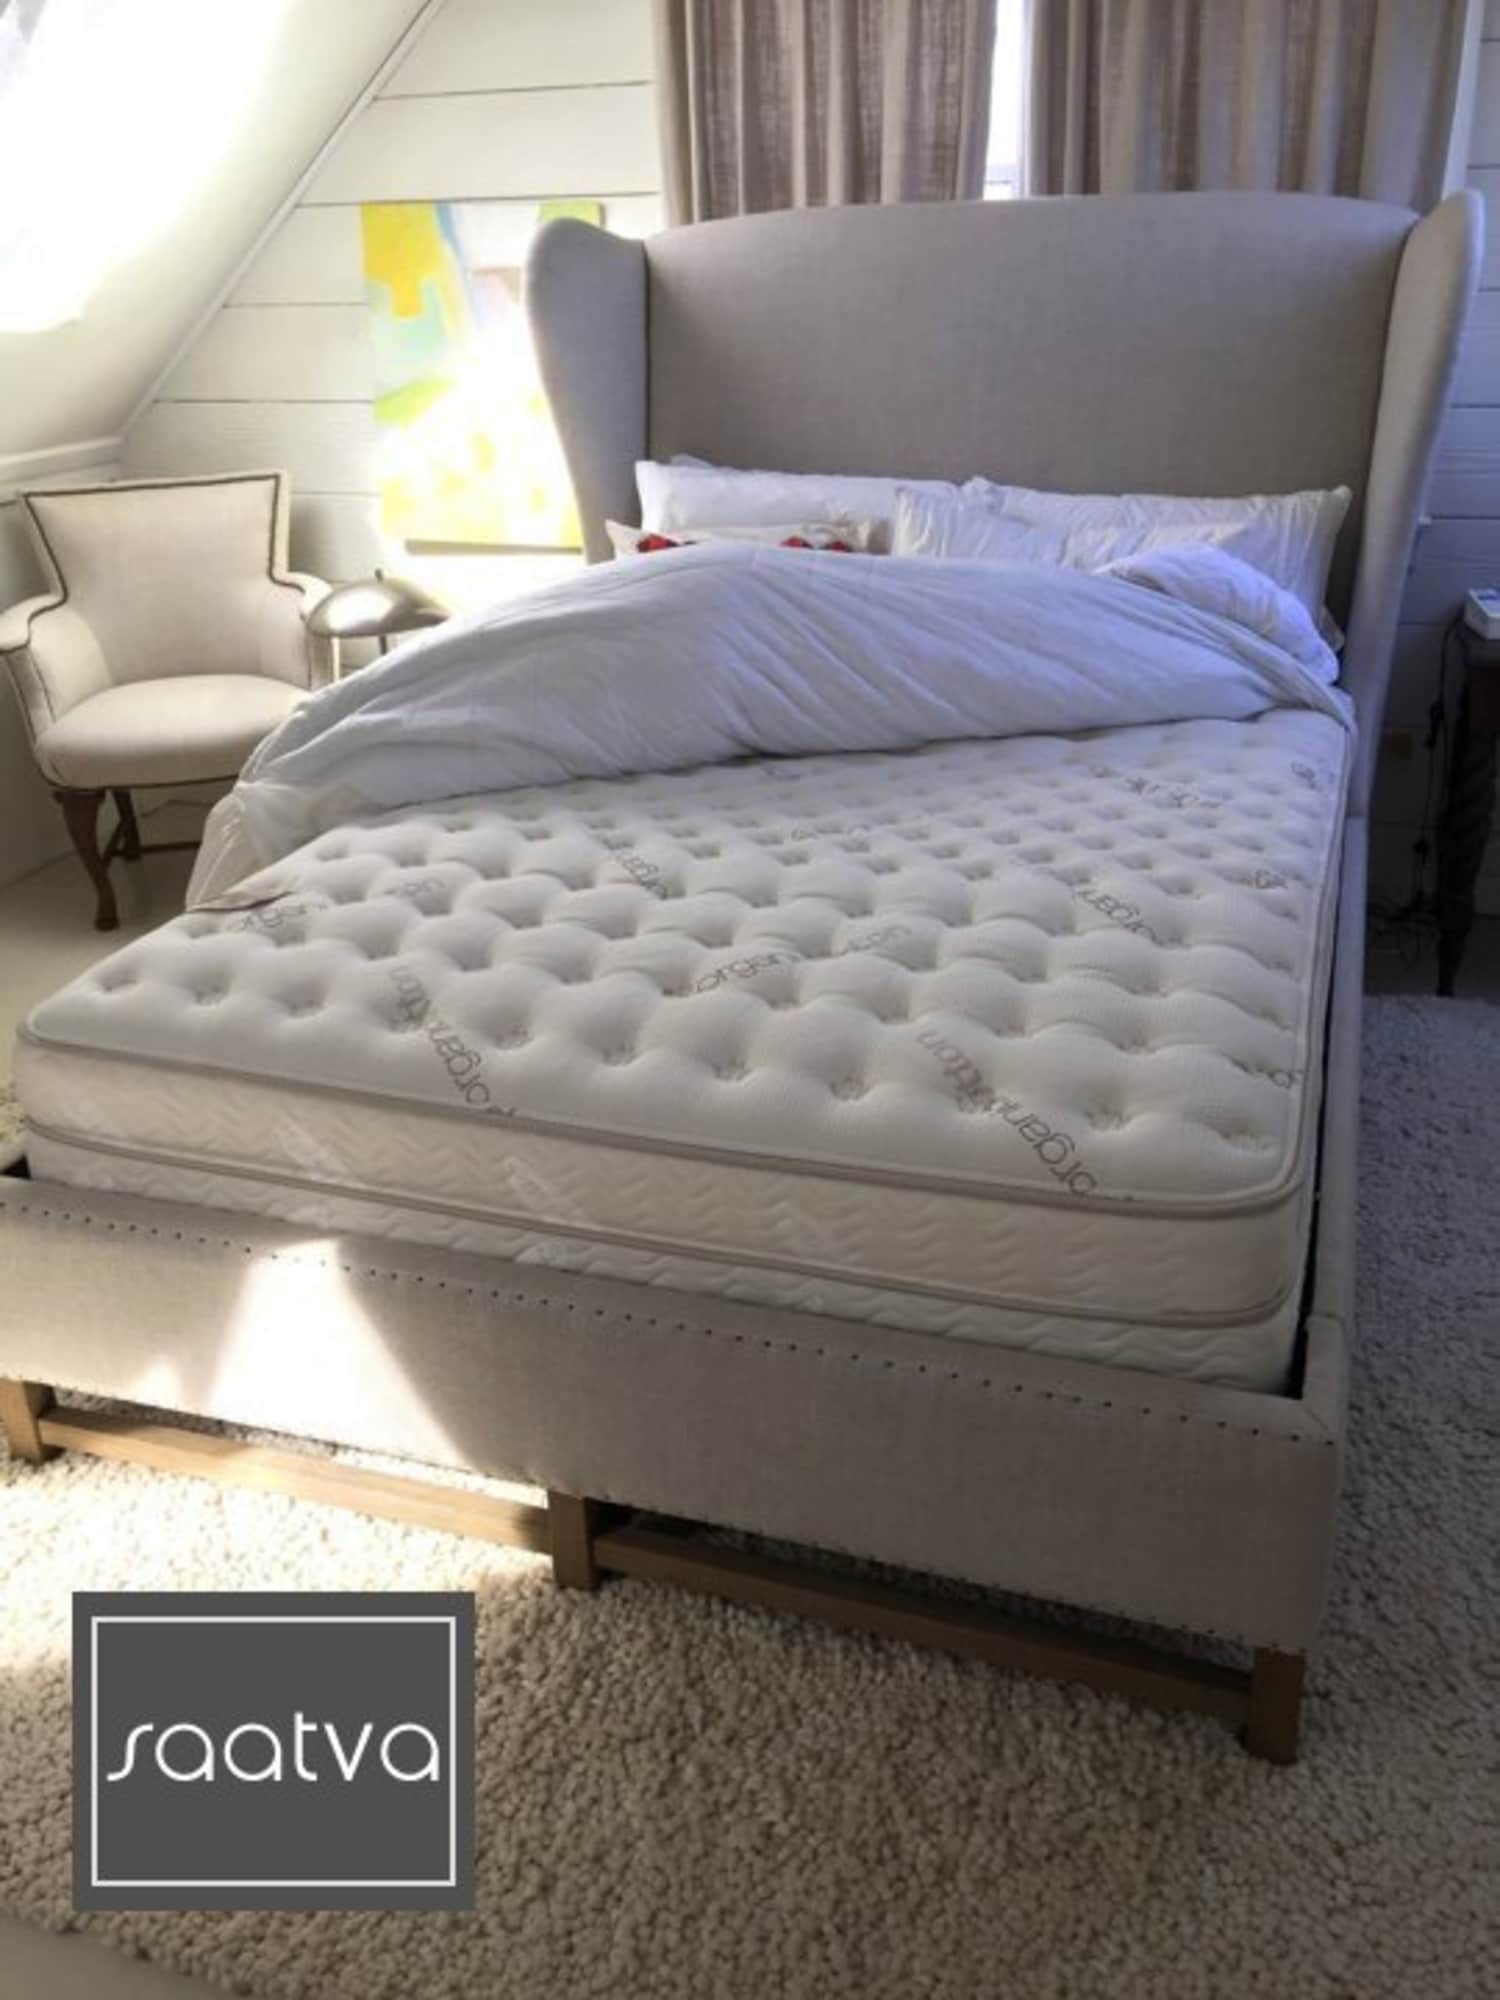 proper sleep test Therapy  Apartment Mattress Firm Saatva  Luxury Review: